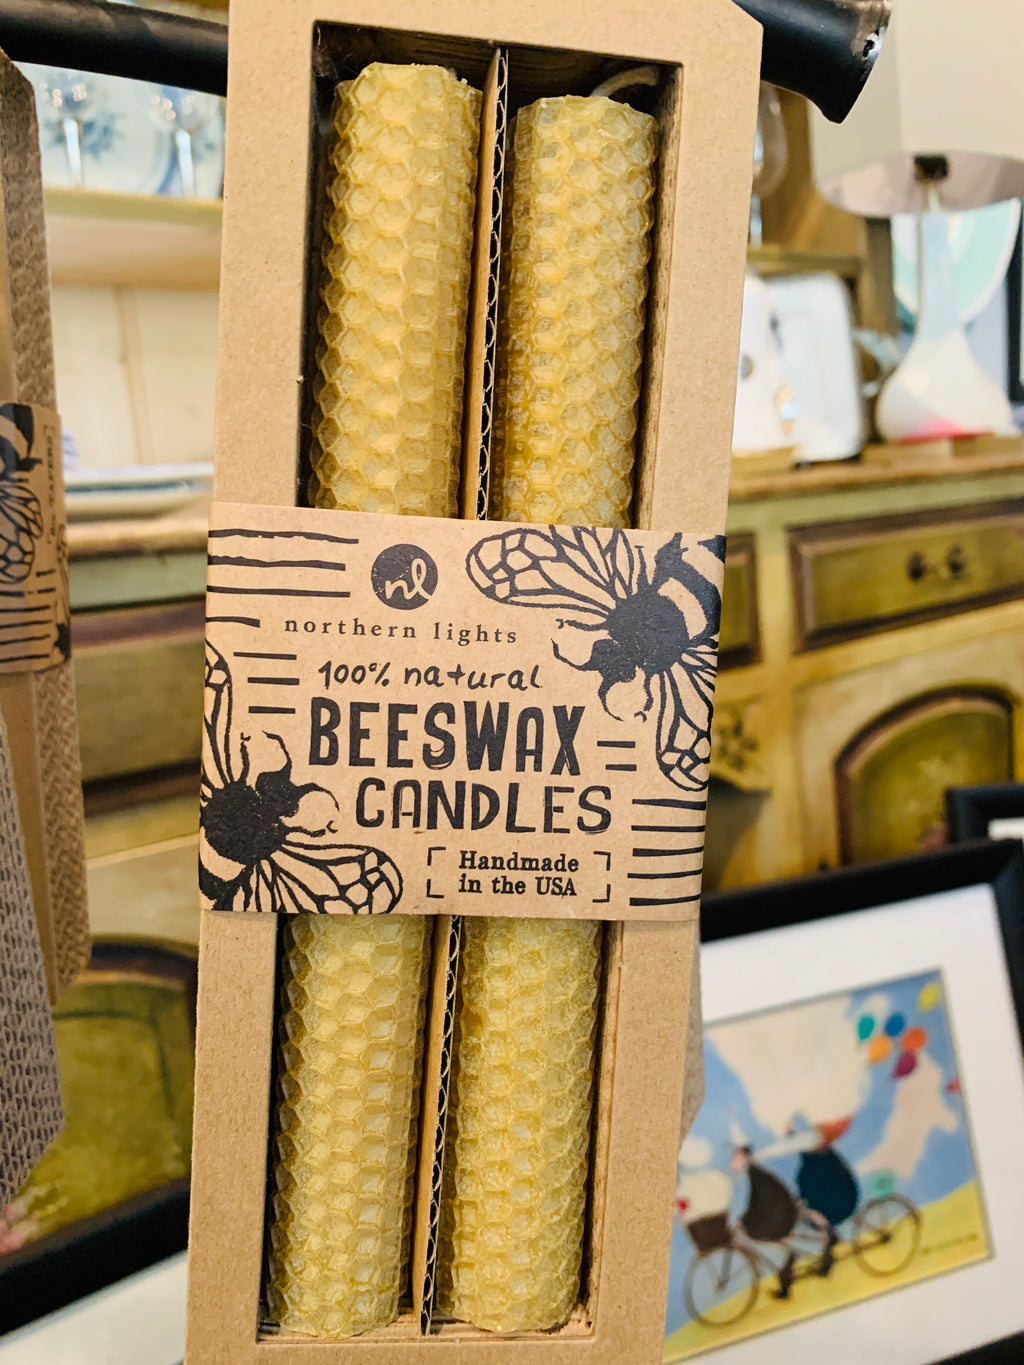 Handmade bees wax candles